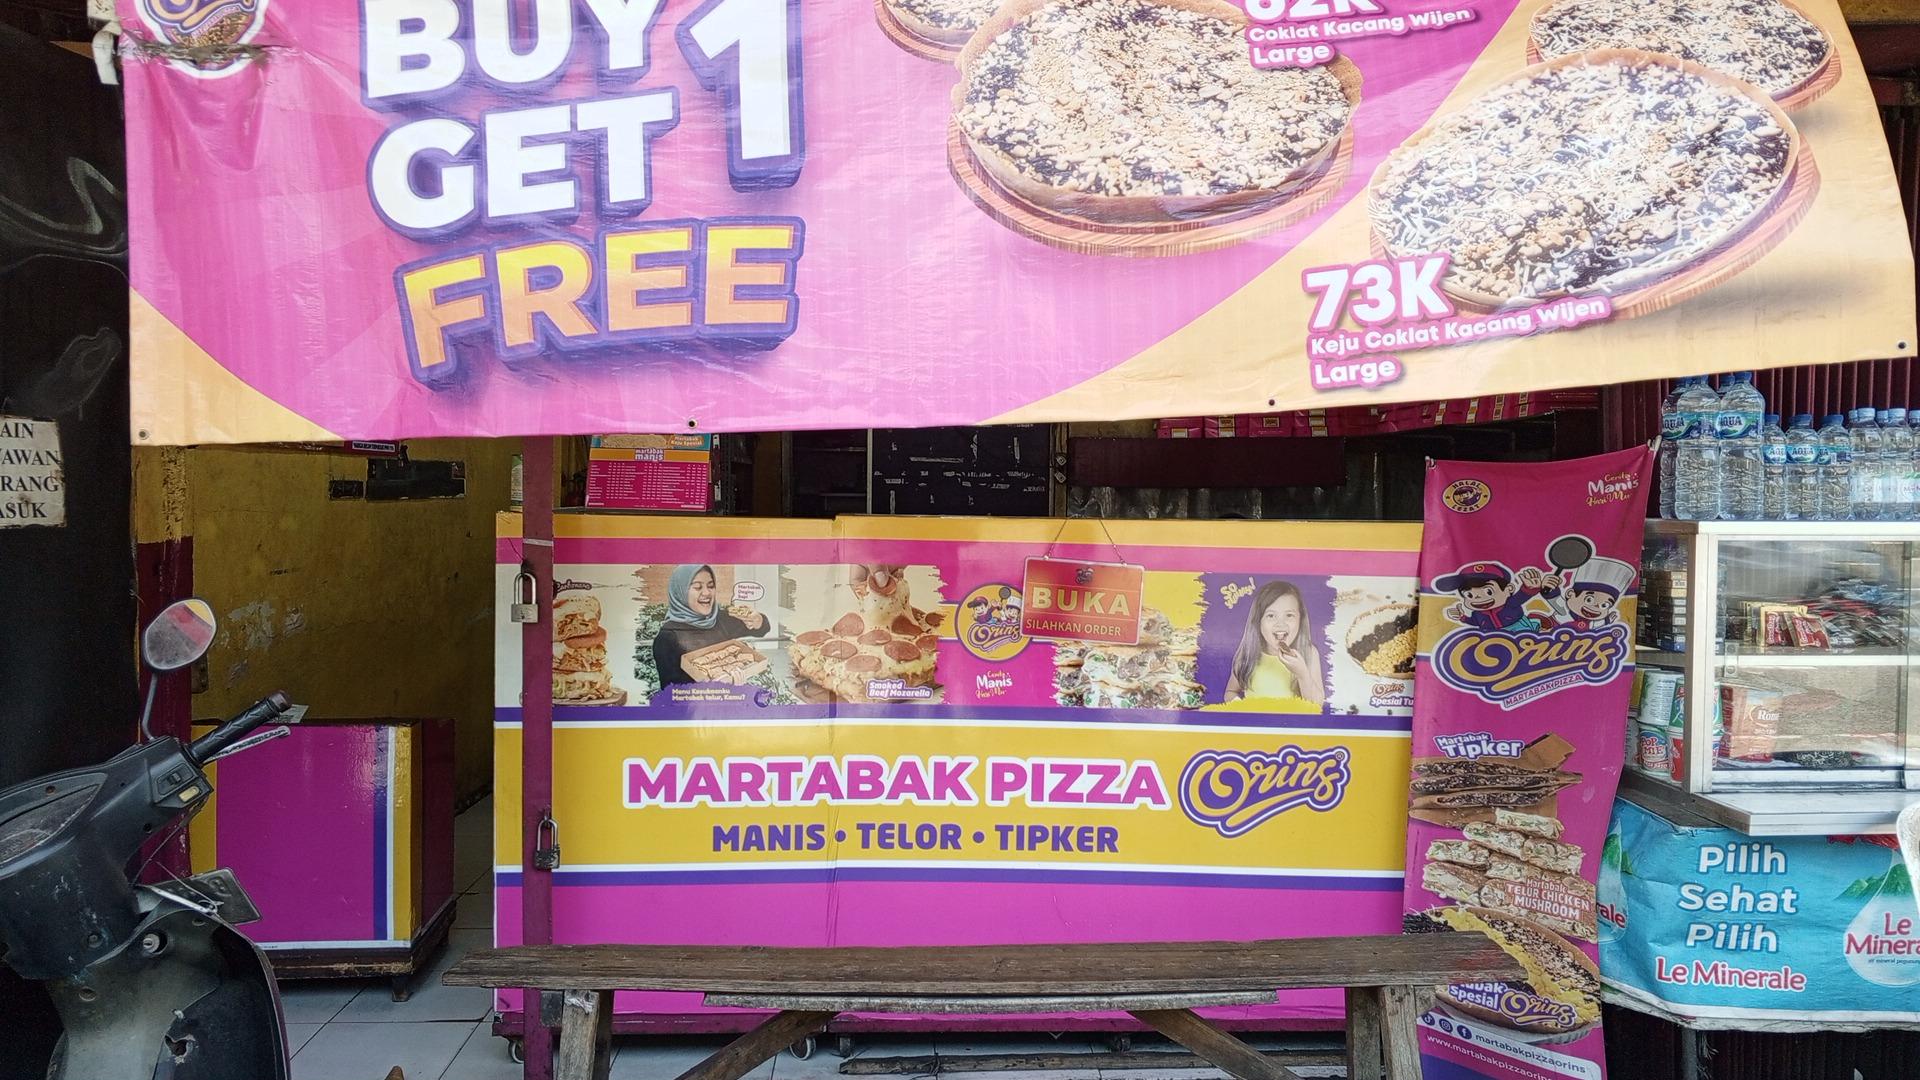 Martabak Pizza Orins - Kelapa Gading review